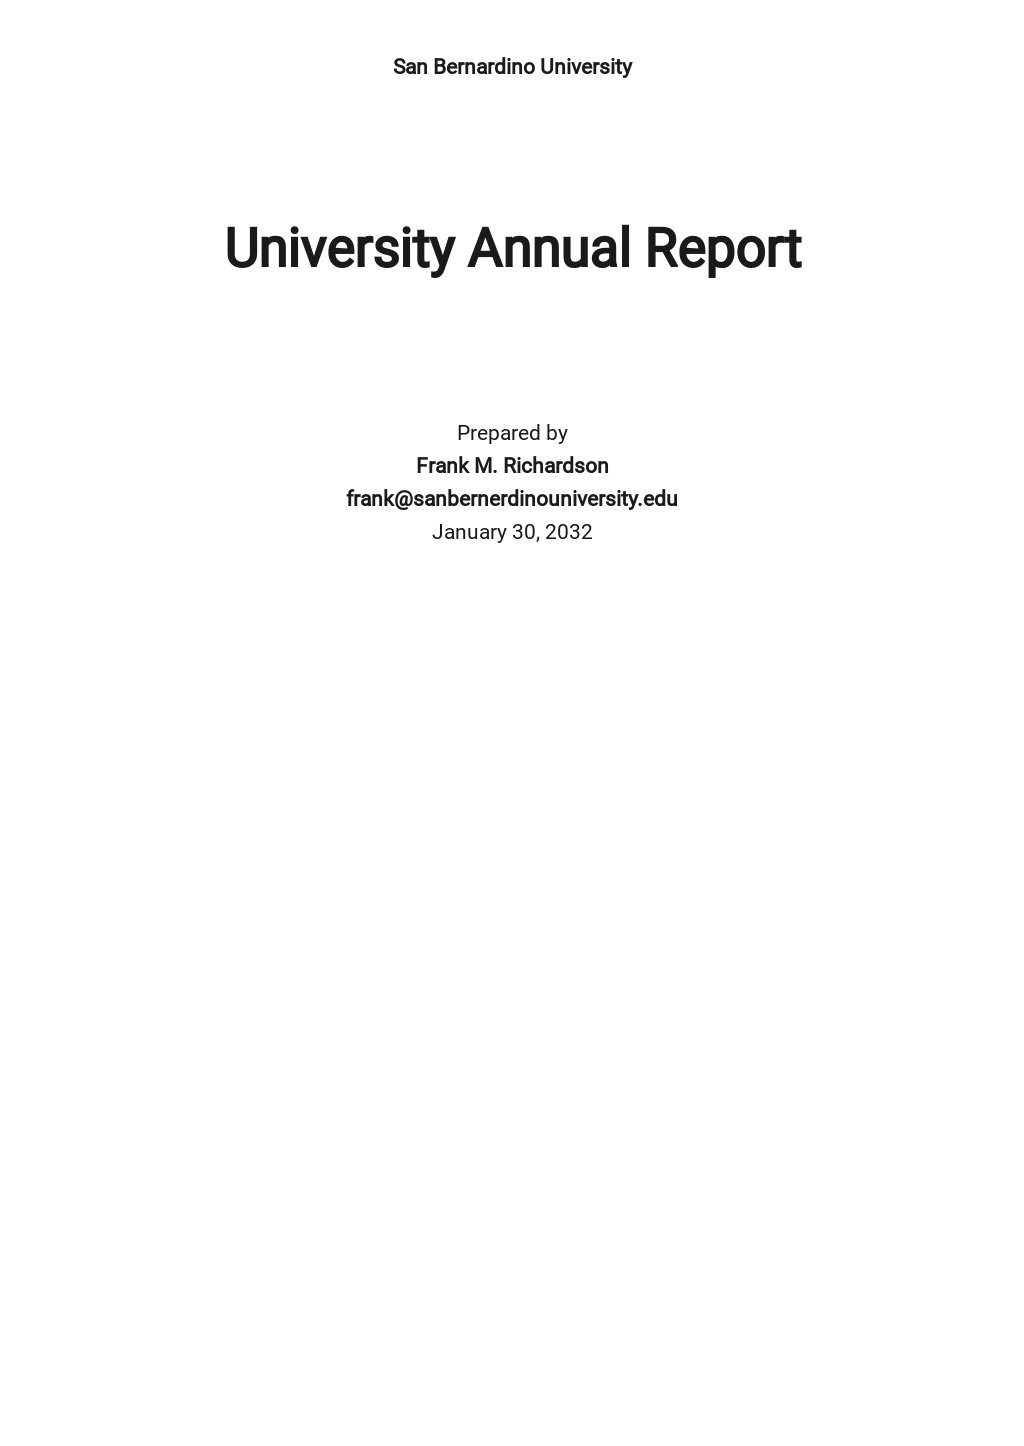 free-university-report-templates-8-download-in-word-google-docs-pdf